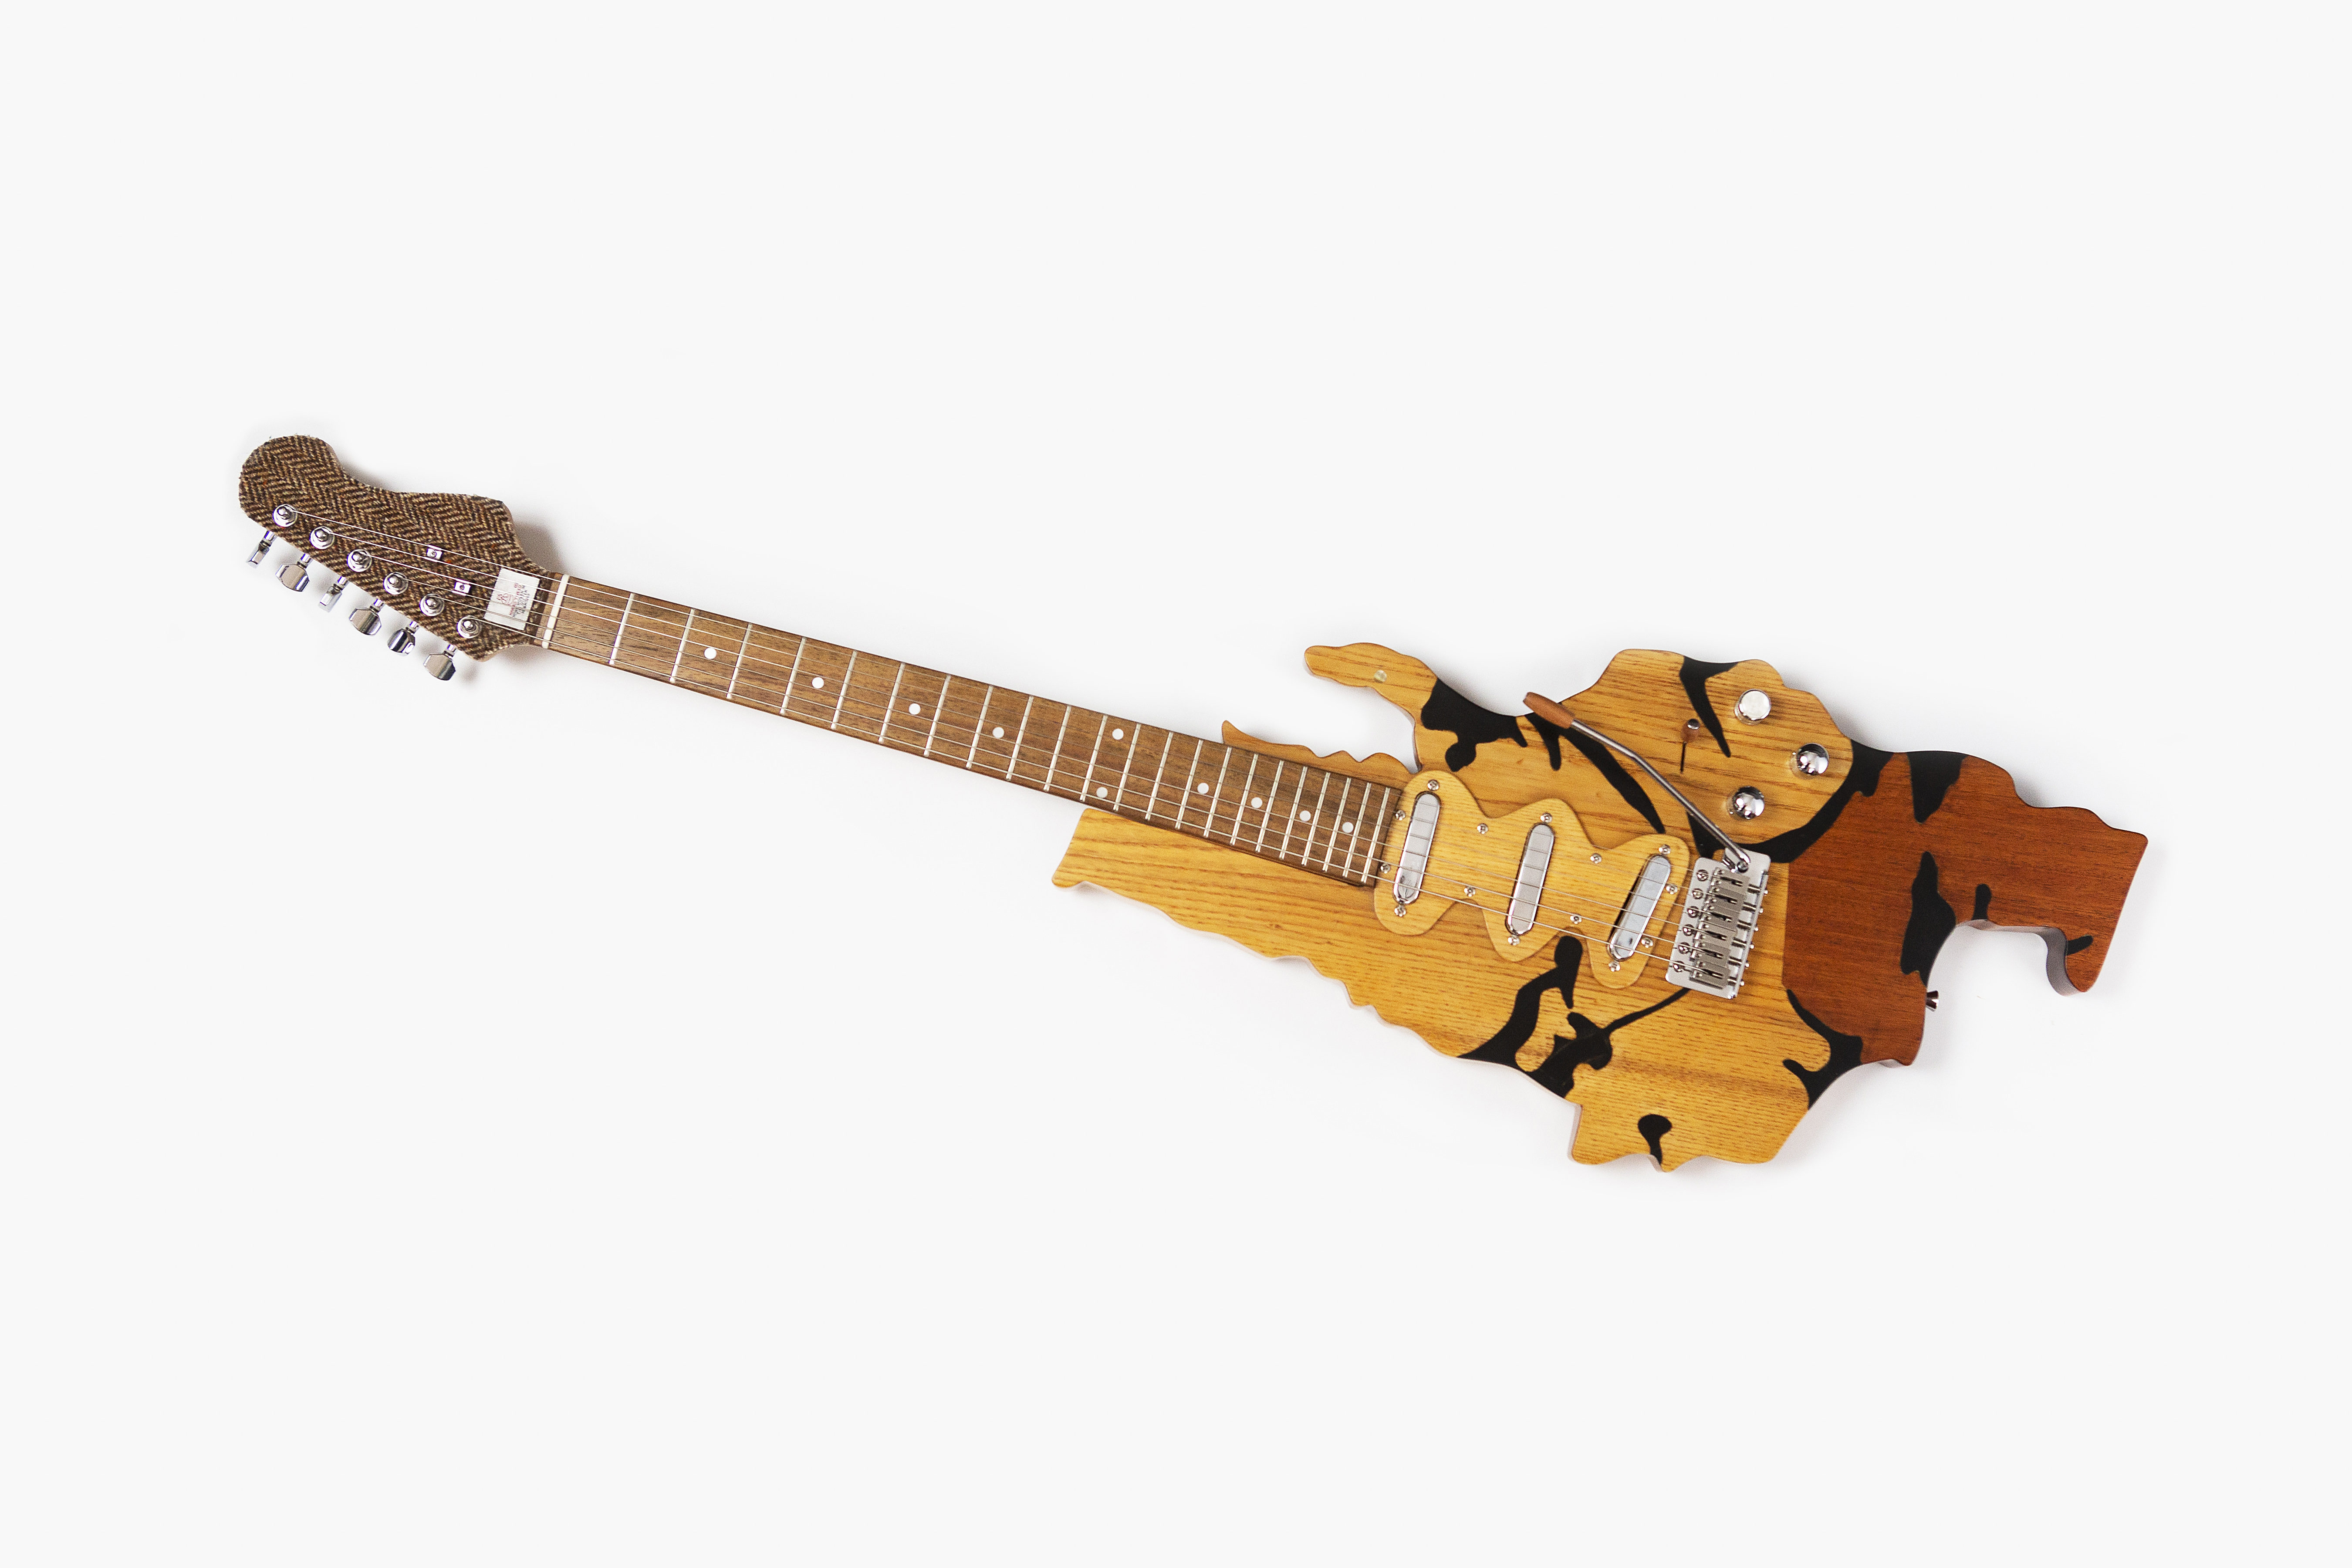 Bespoke Long Island guitar.